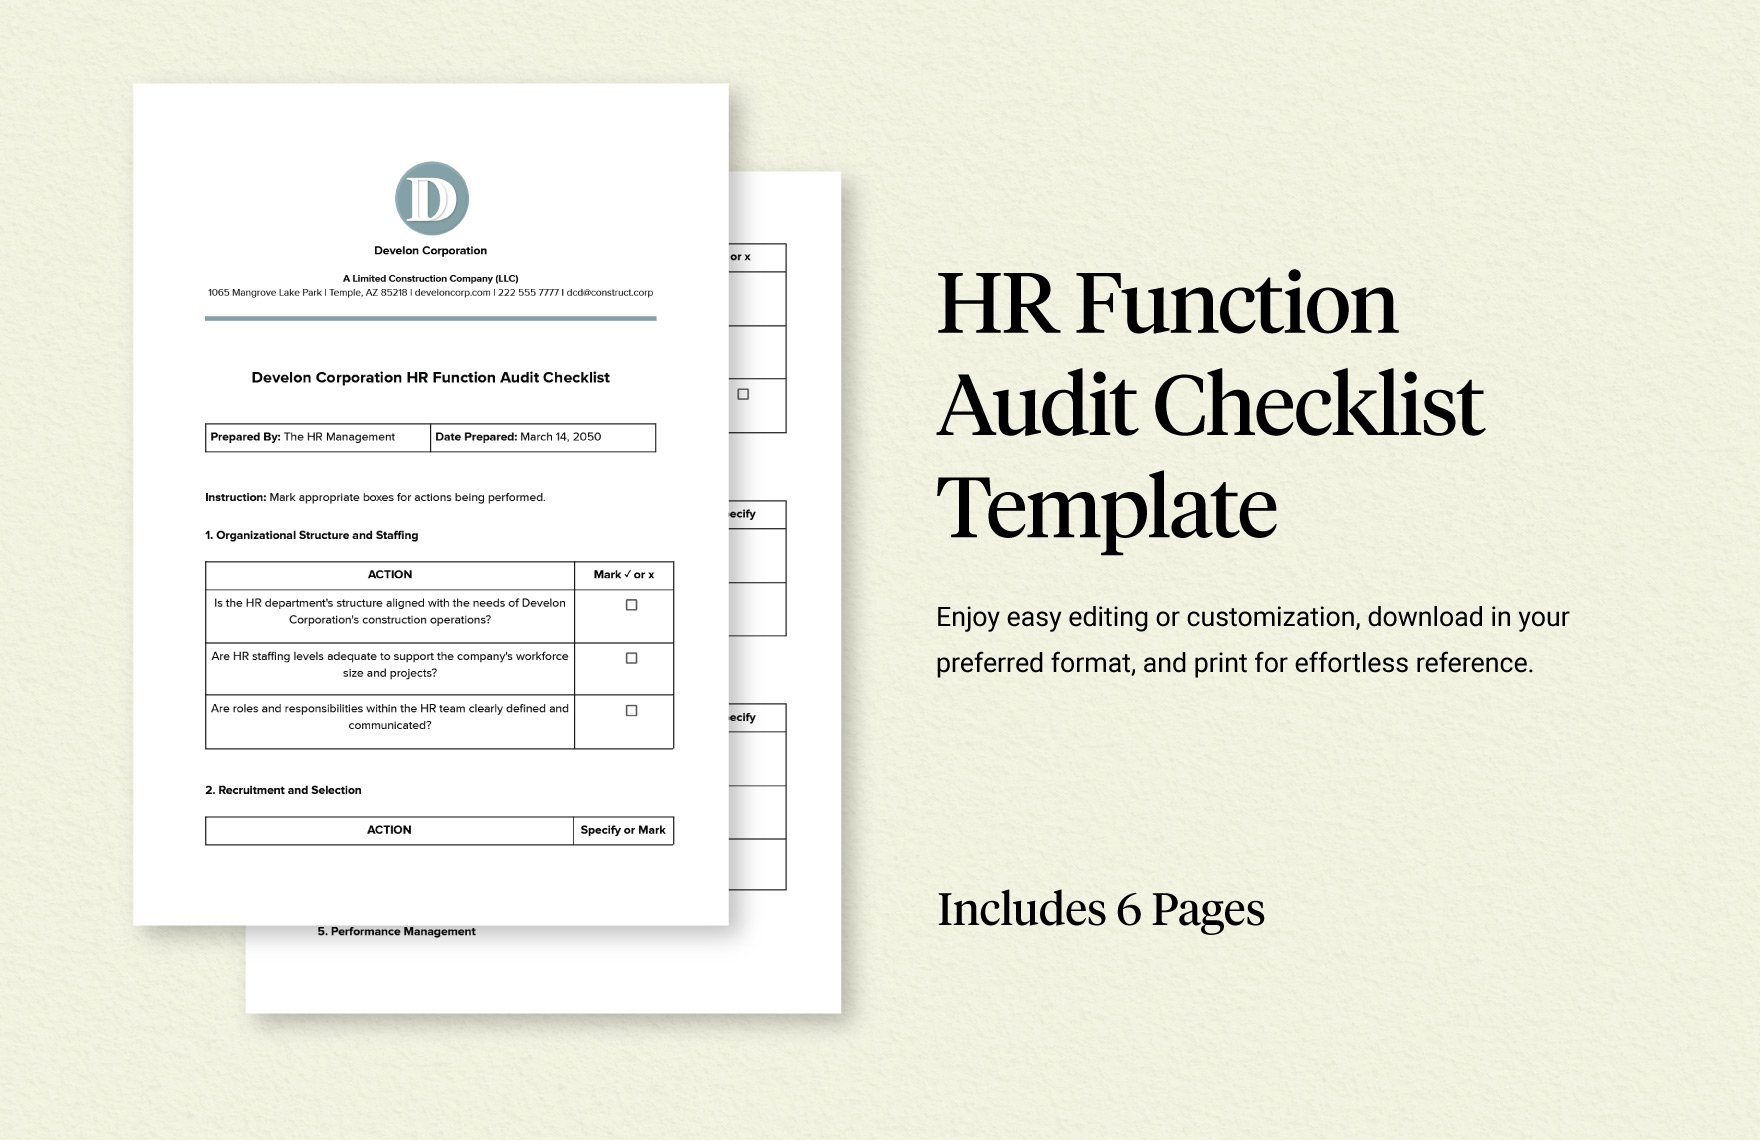 HR Function Audit Checklist Template